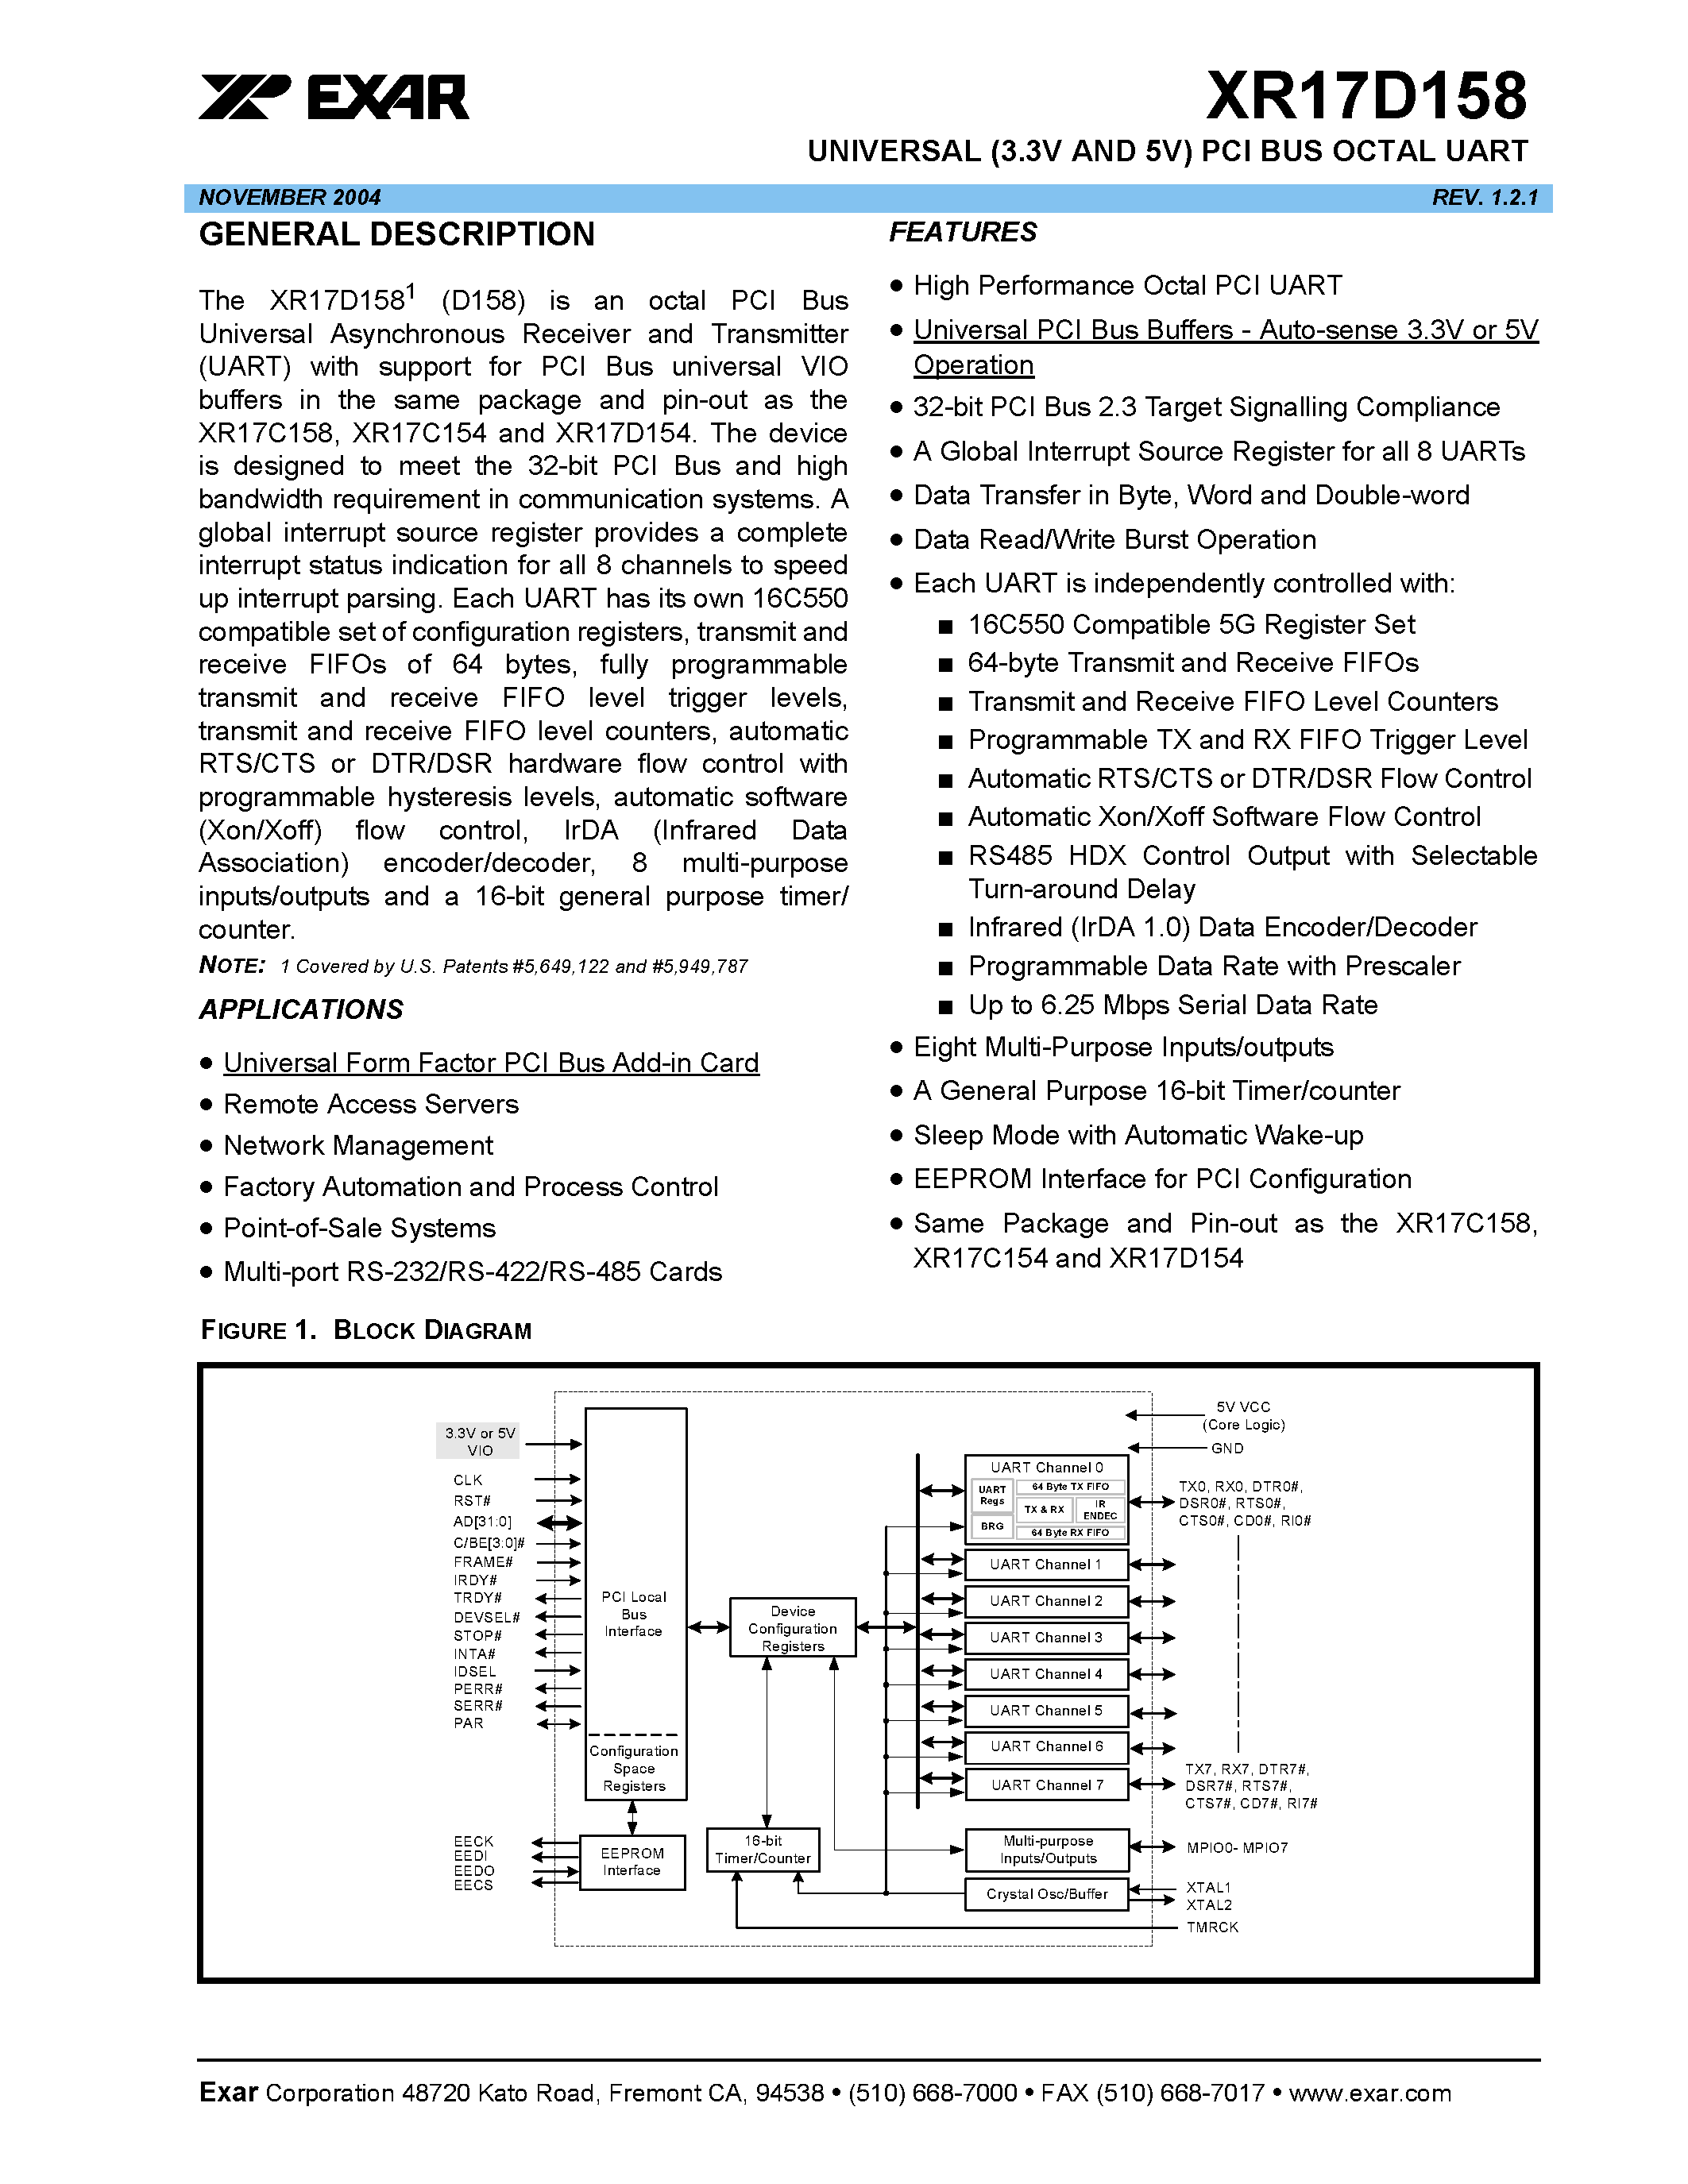 Datasheet XR17D158 - UNIVERSAL (3.3V AND 5V) PCI BUS OCTAL UART page 1